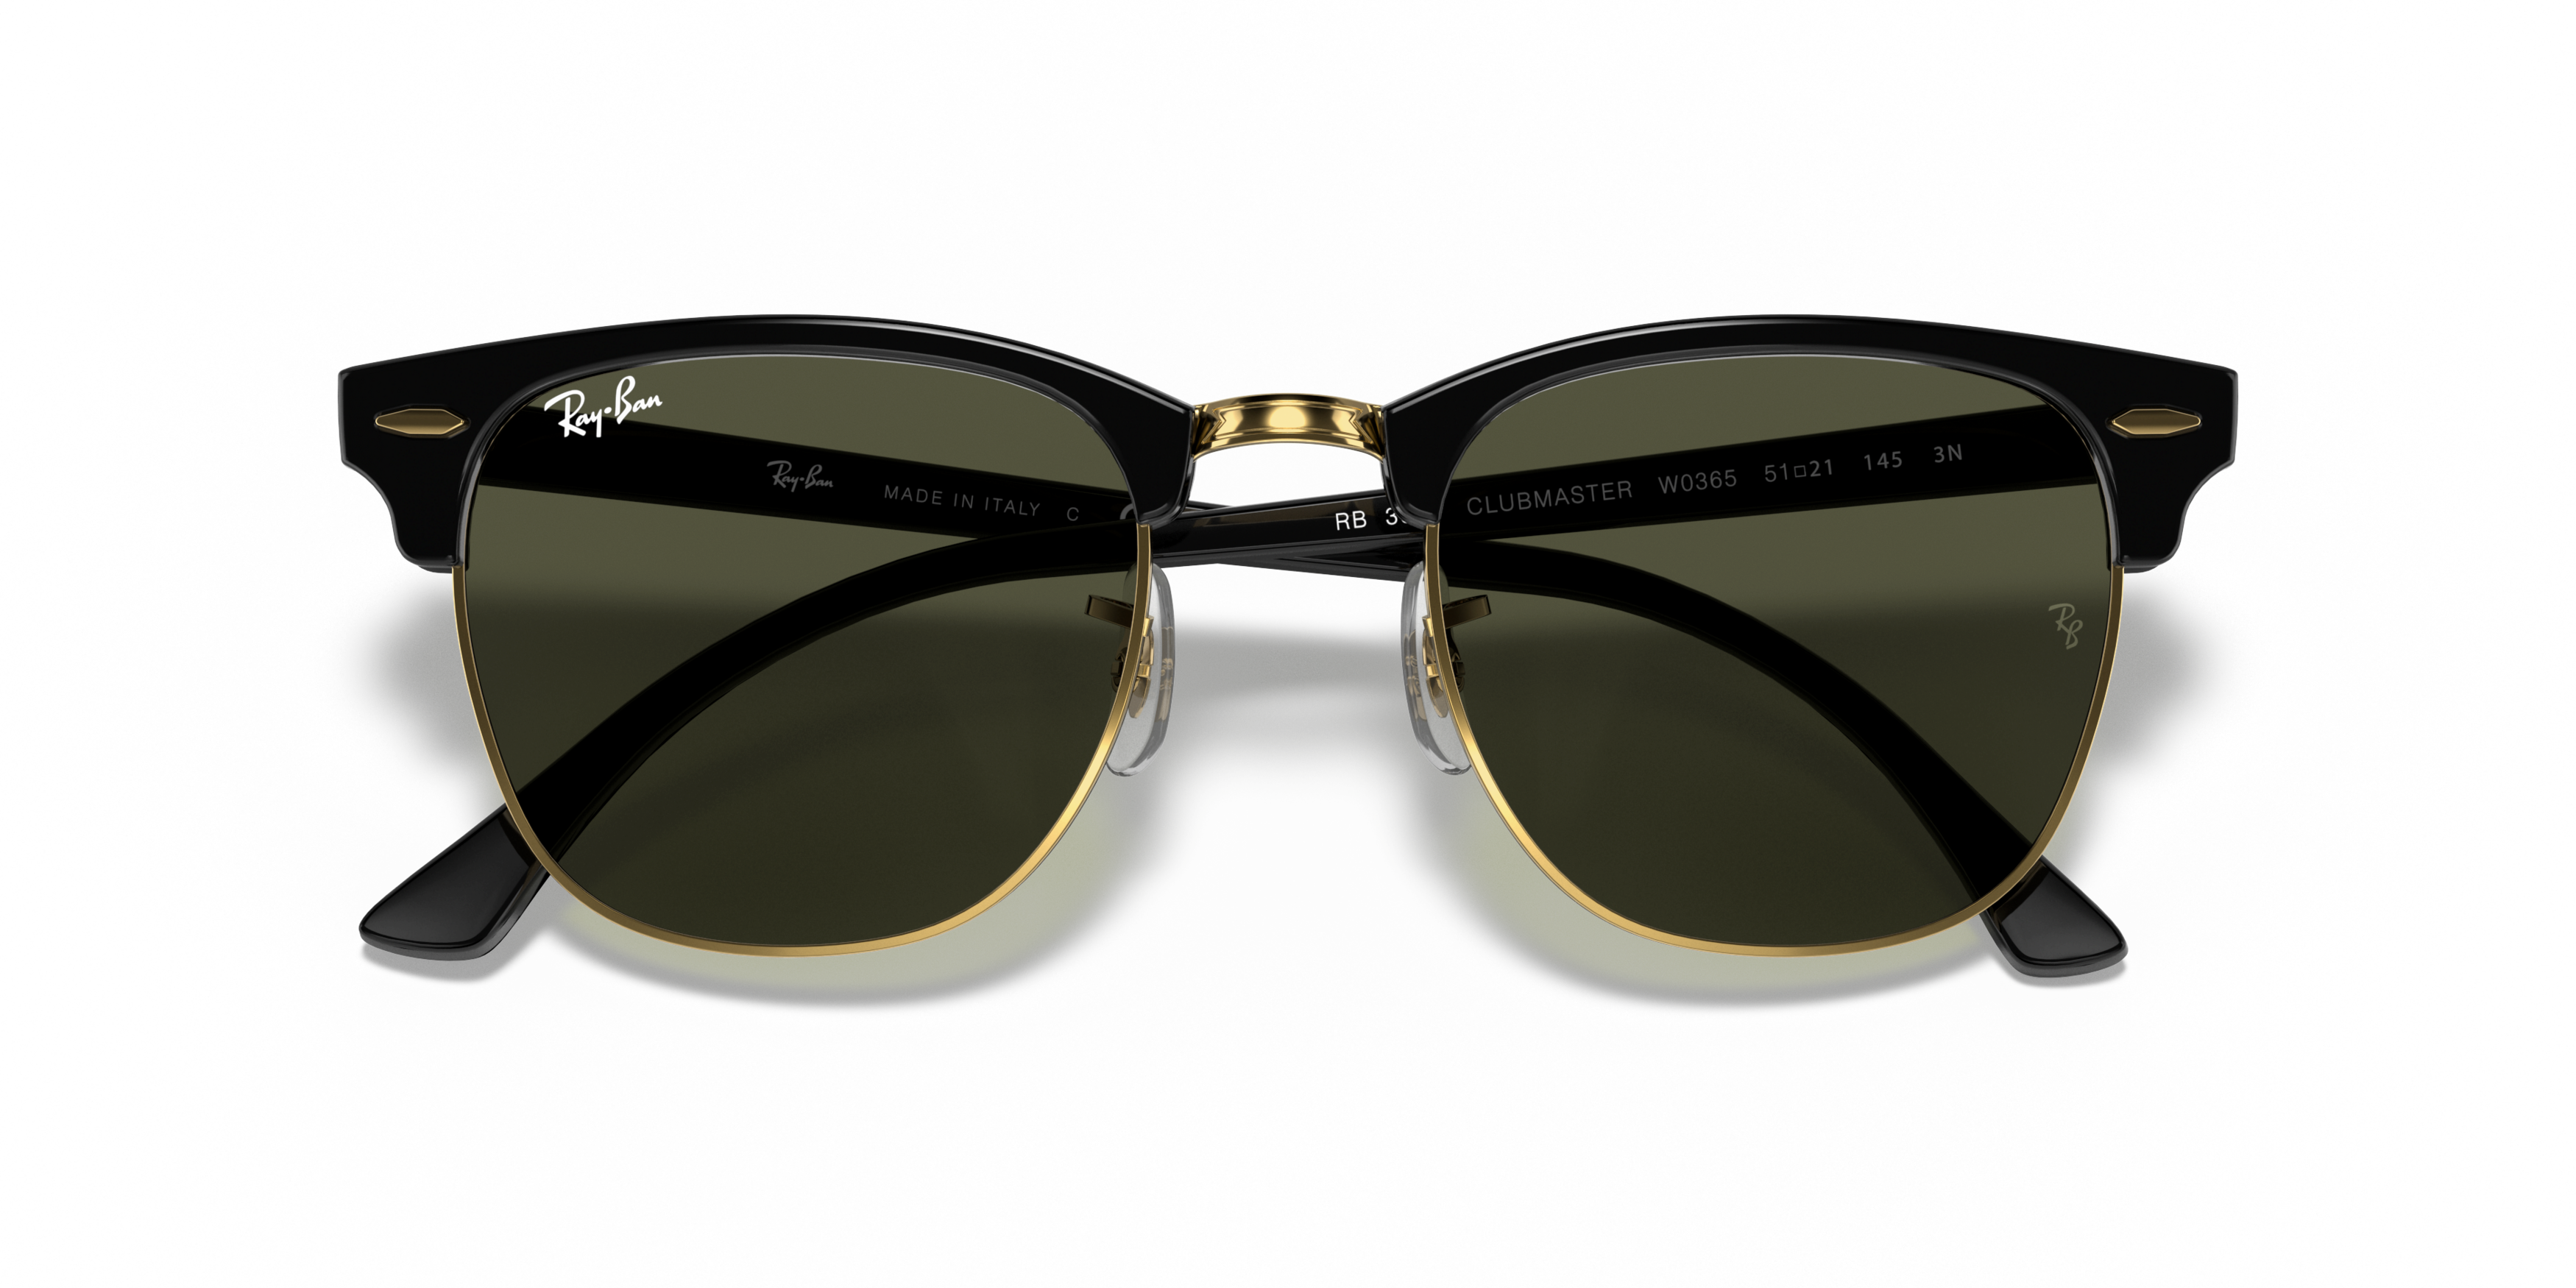 Folded Ray-Ban Club Master RB 3016 (W0365) Sunglasses Green / Black